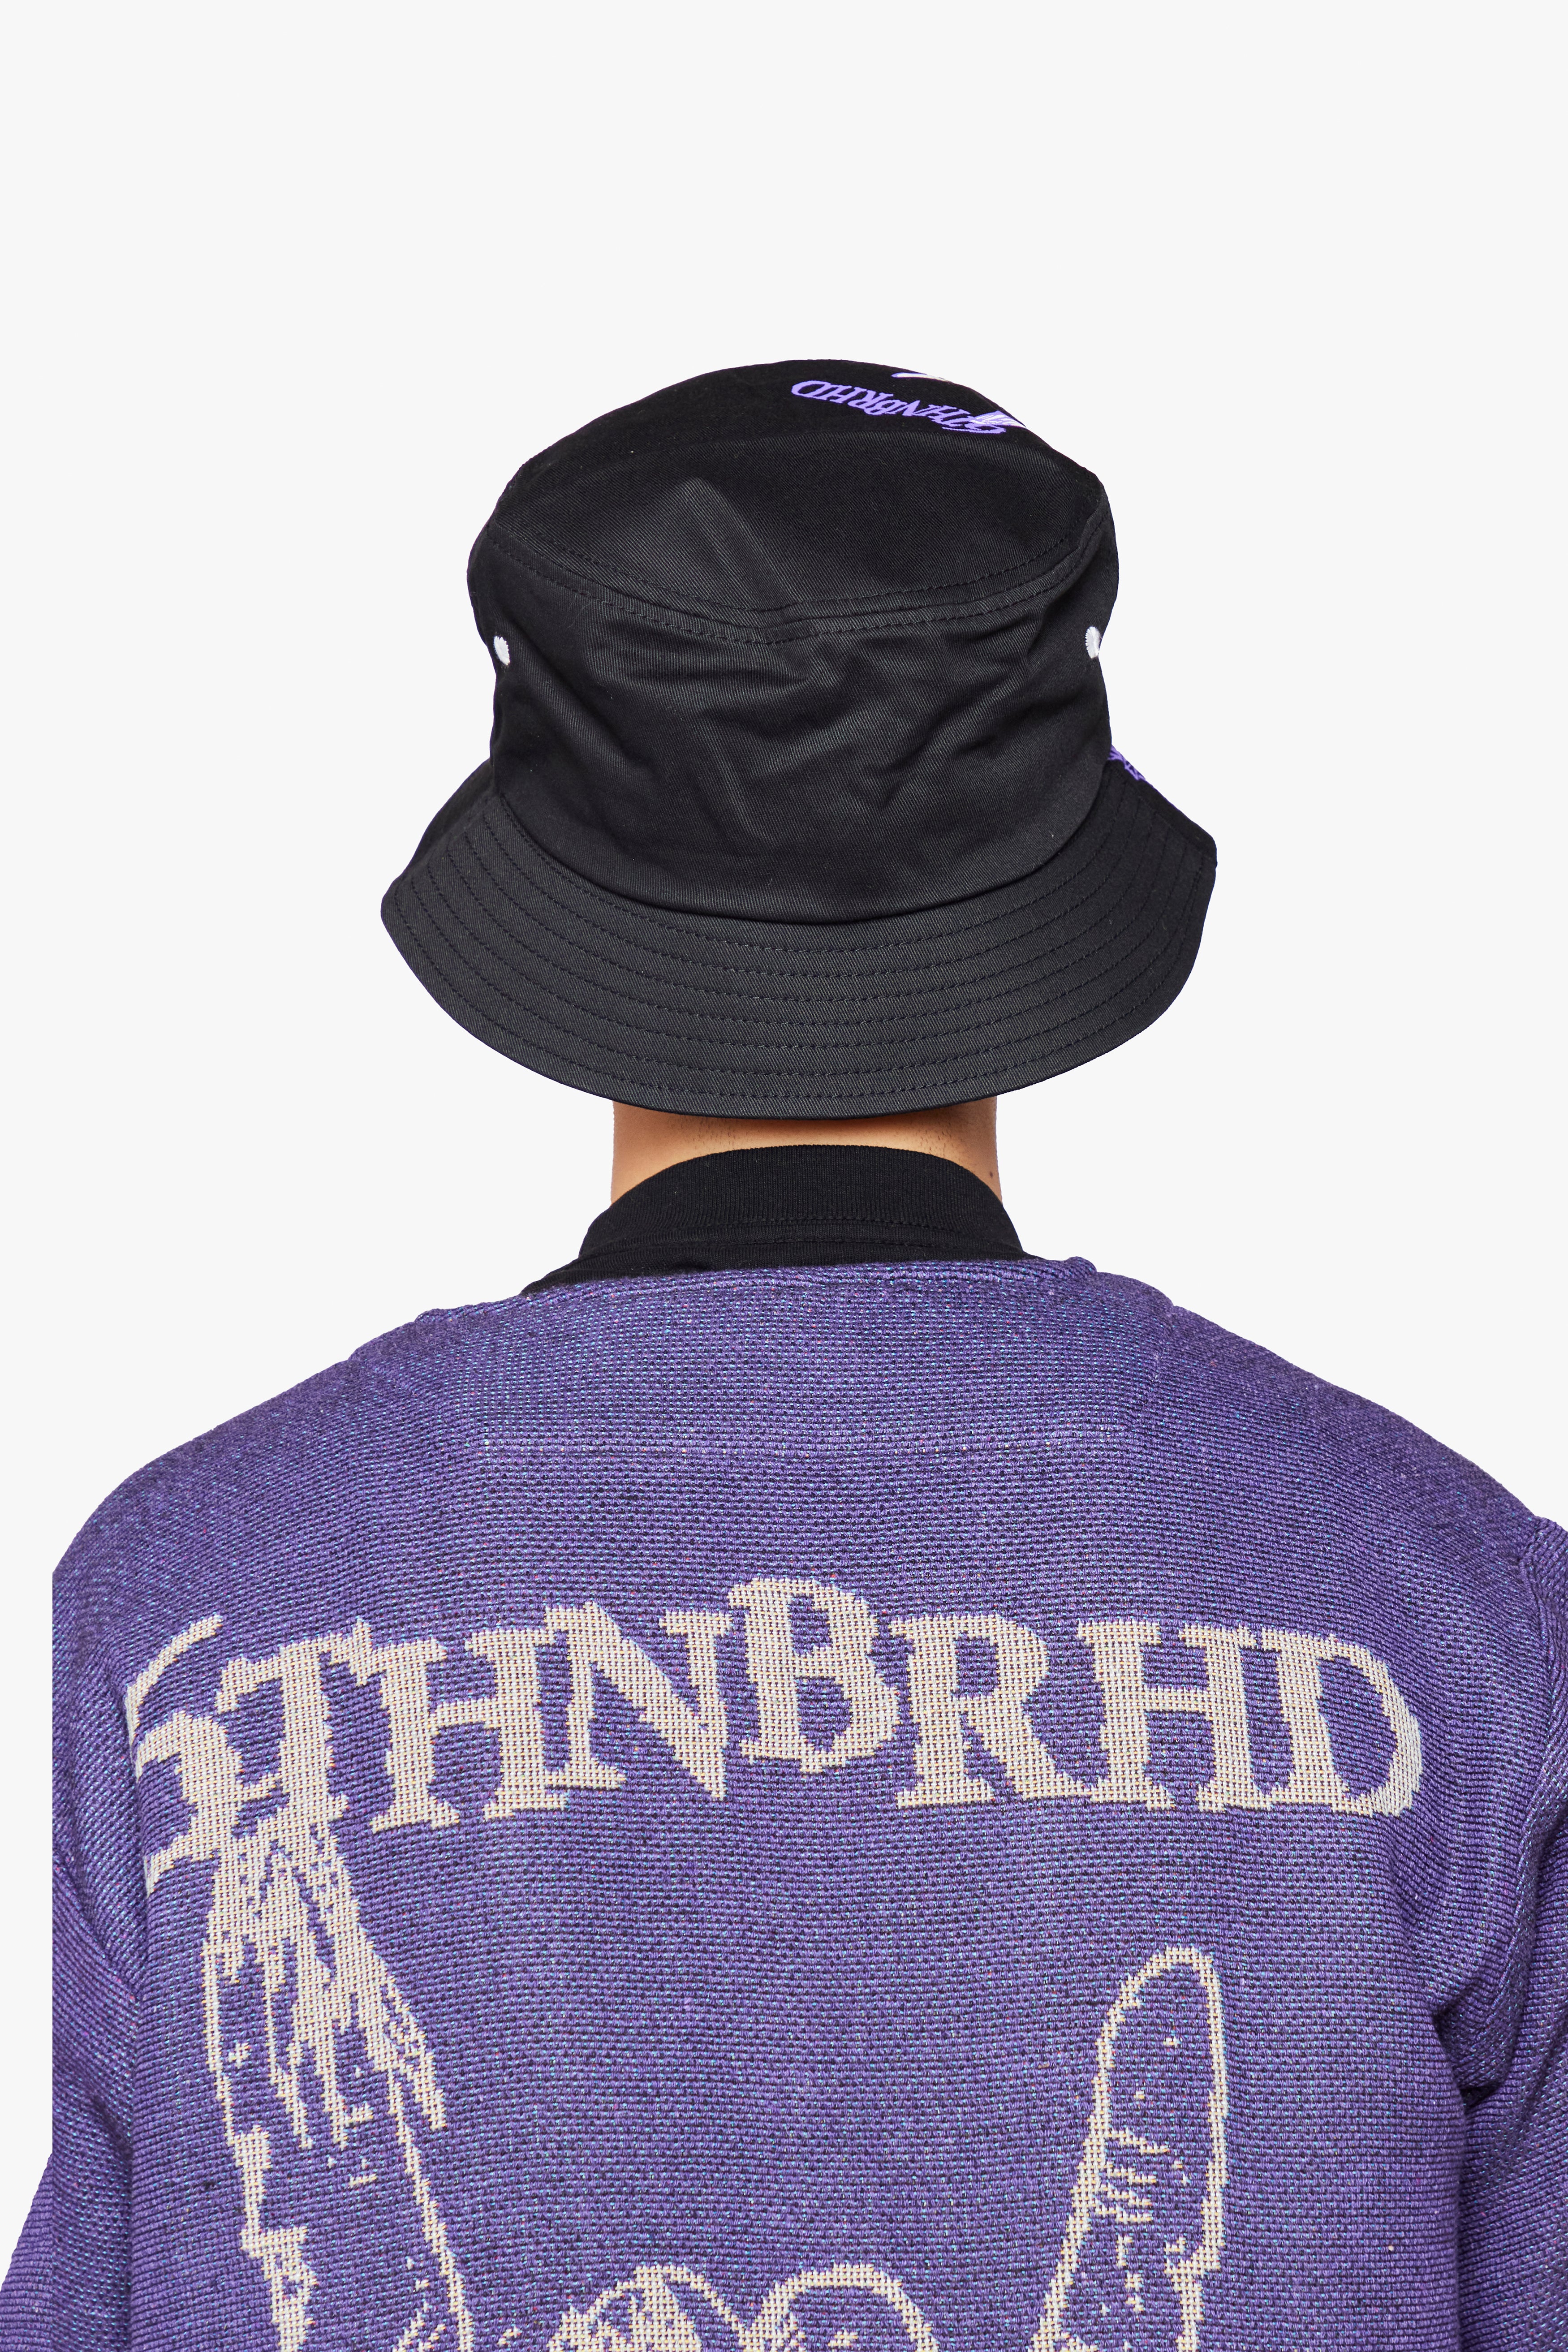 6thNBRHD BUCKET HAT "FINALEREST" -BLACK